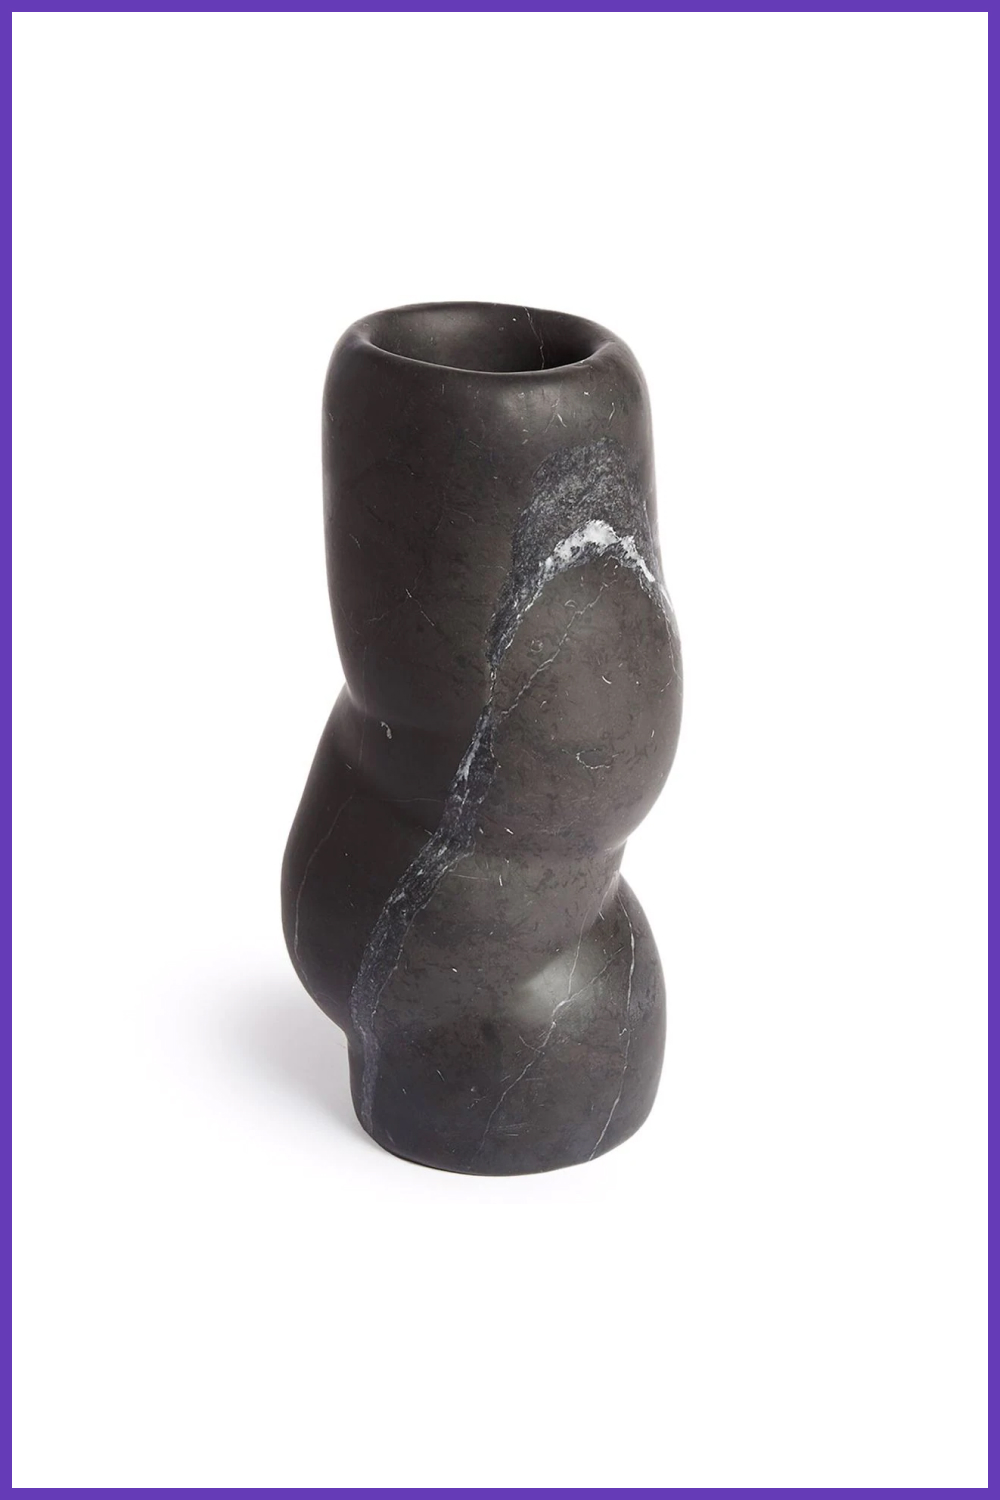 Bloc studios fatrolls marble vase.